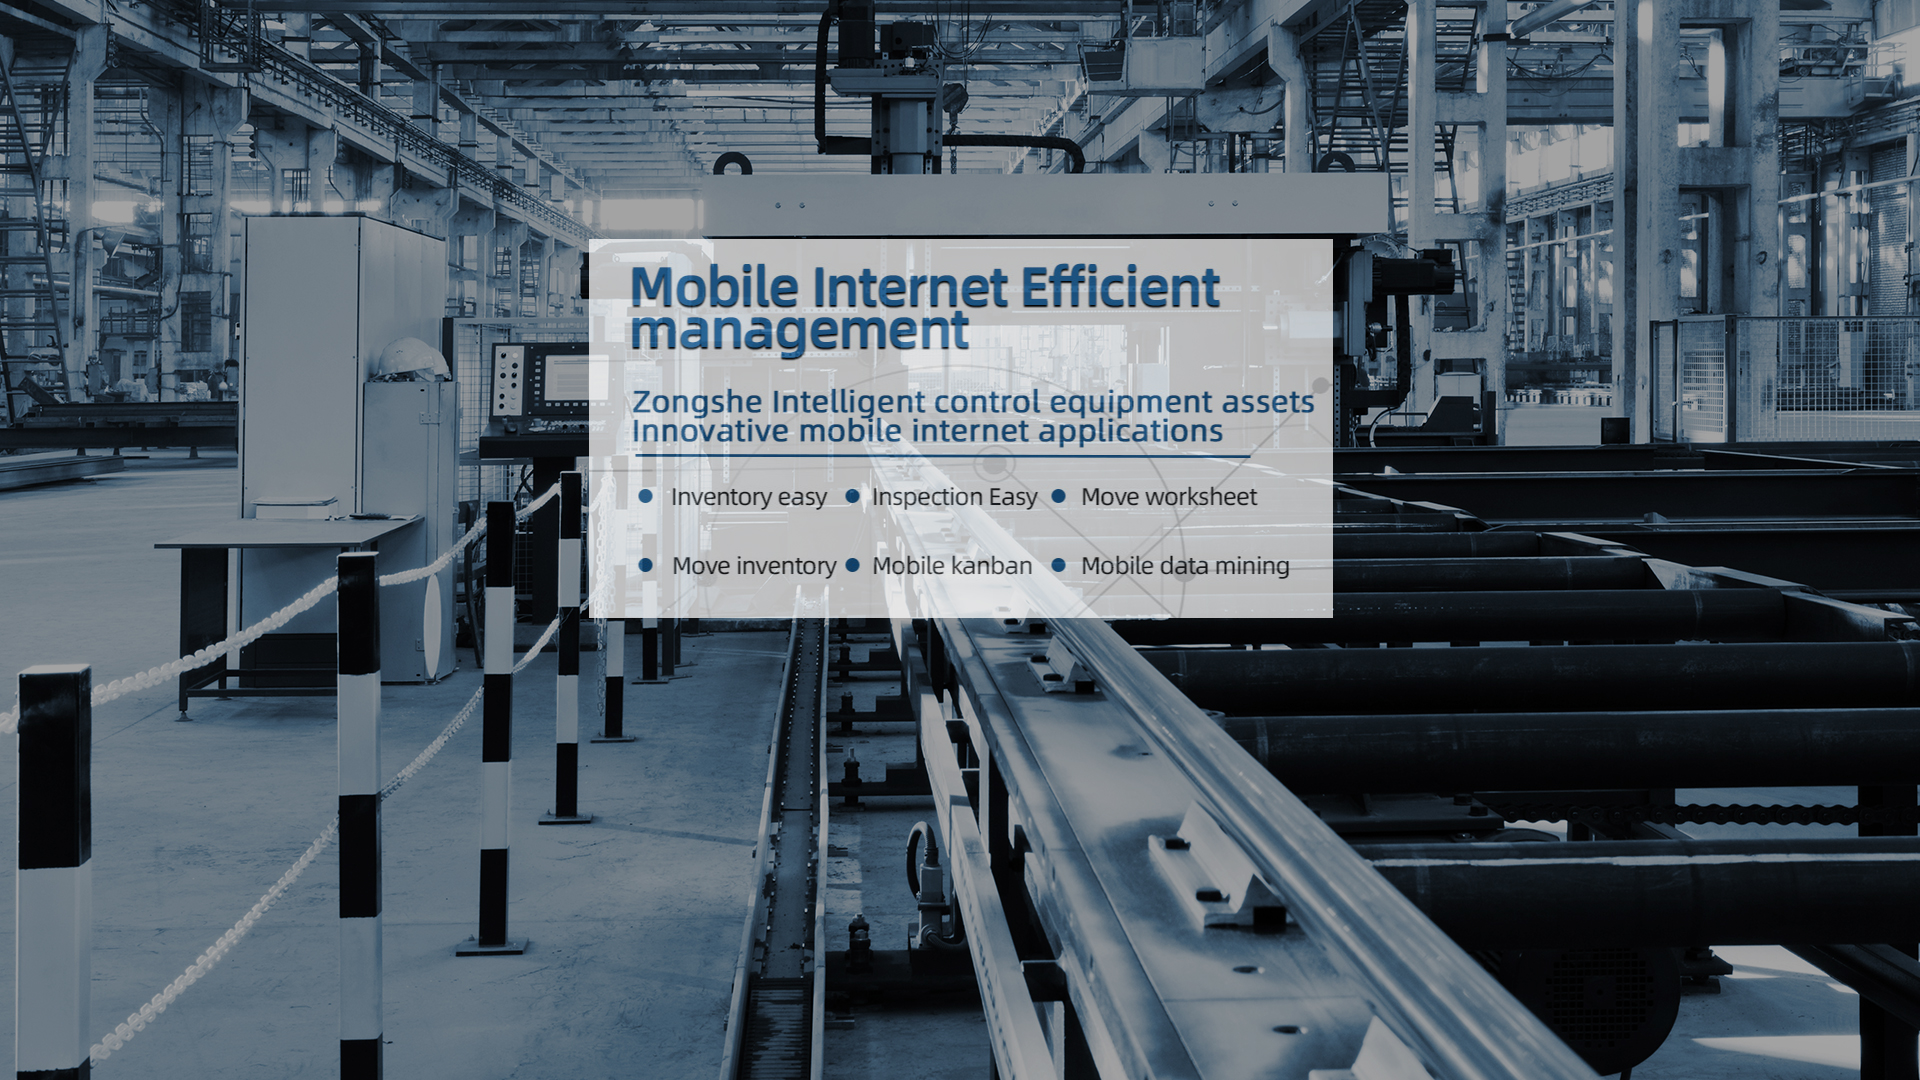 CMEC Equipment Asset Management and Control Platform